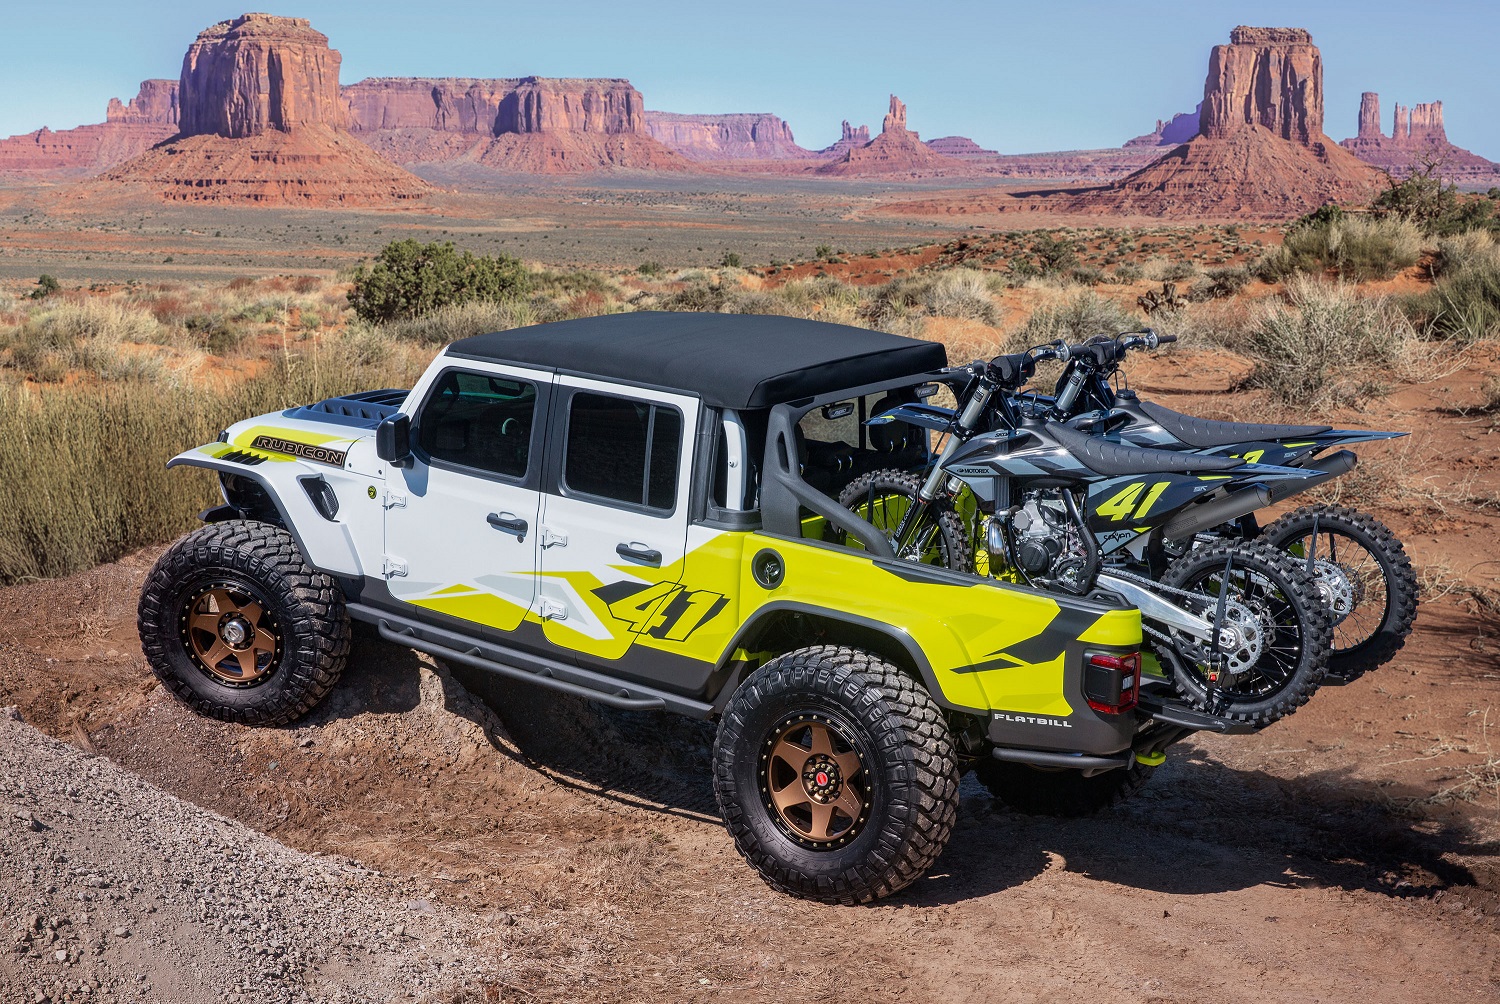 2019 Jeep Moab Safari concepts